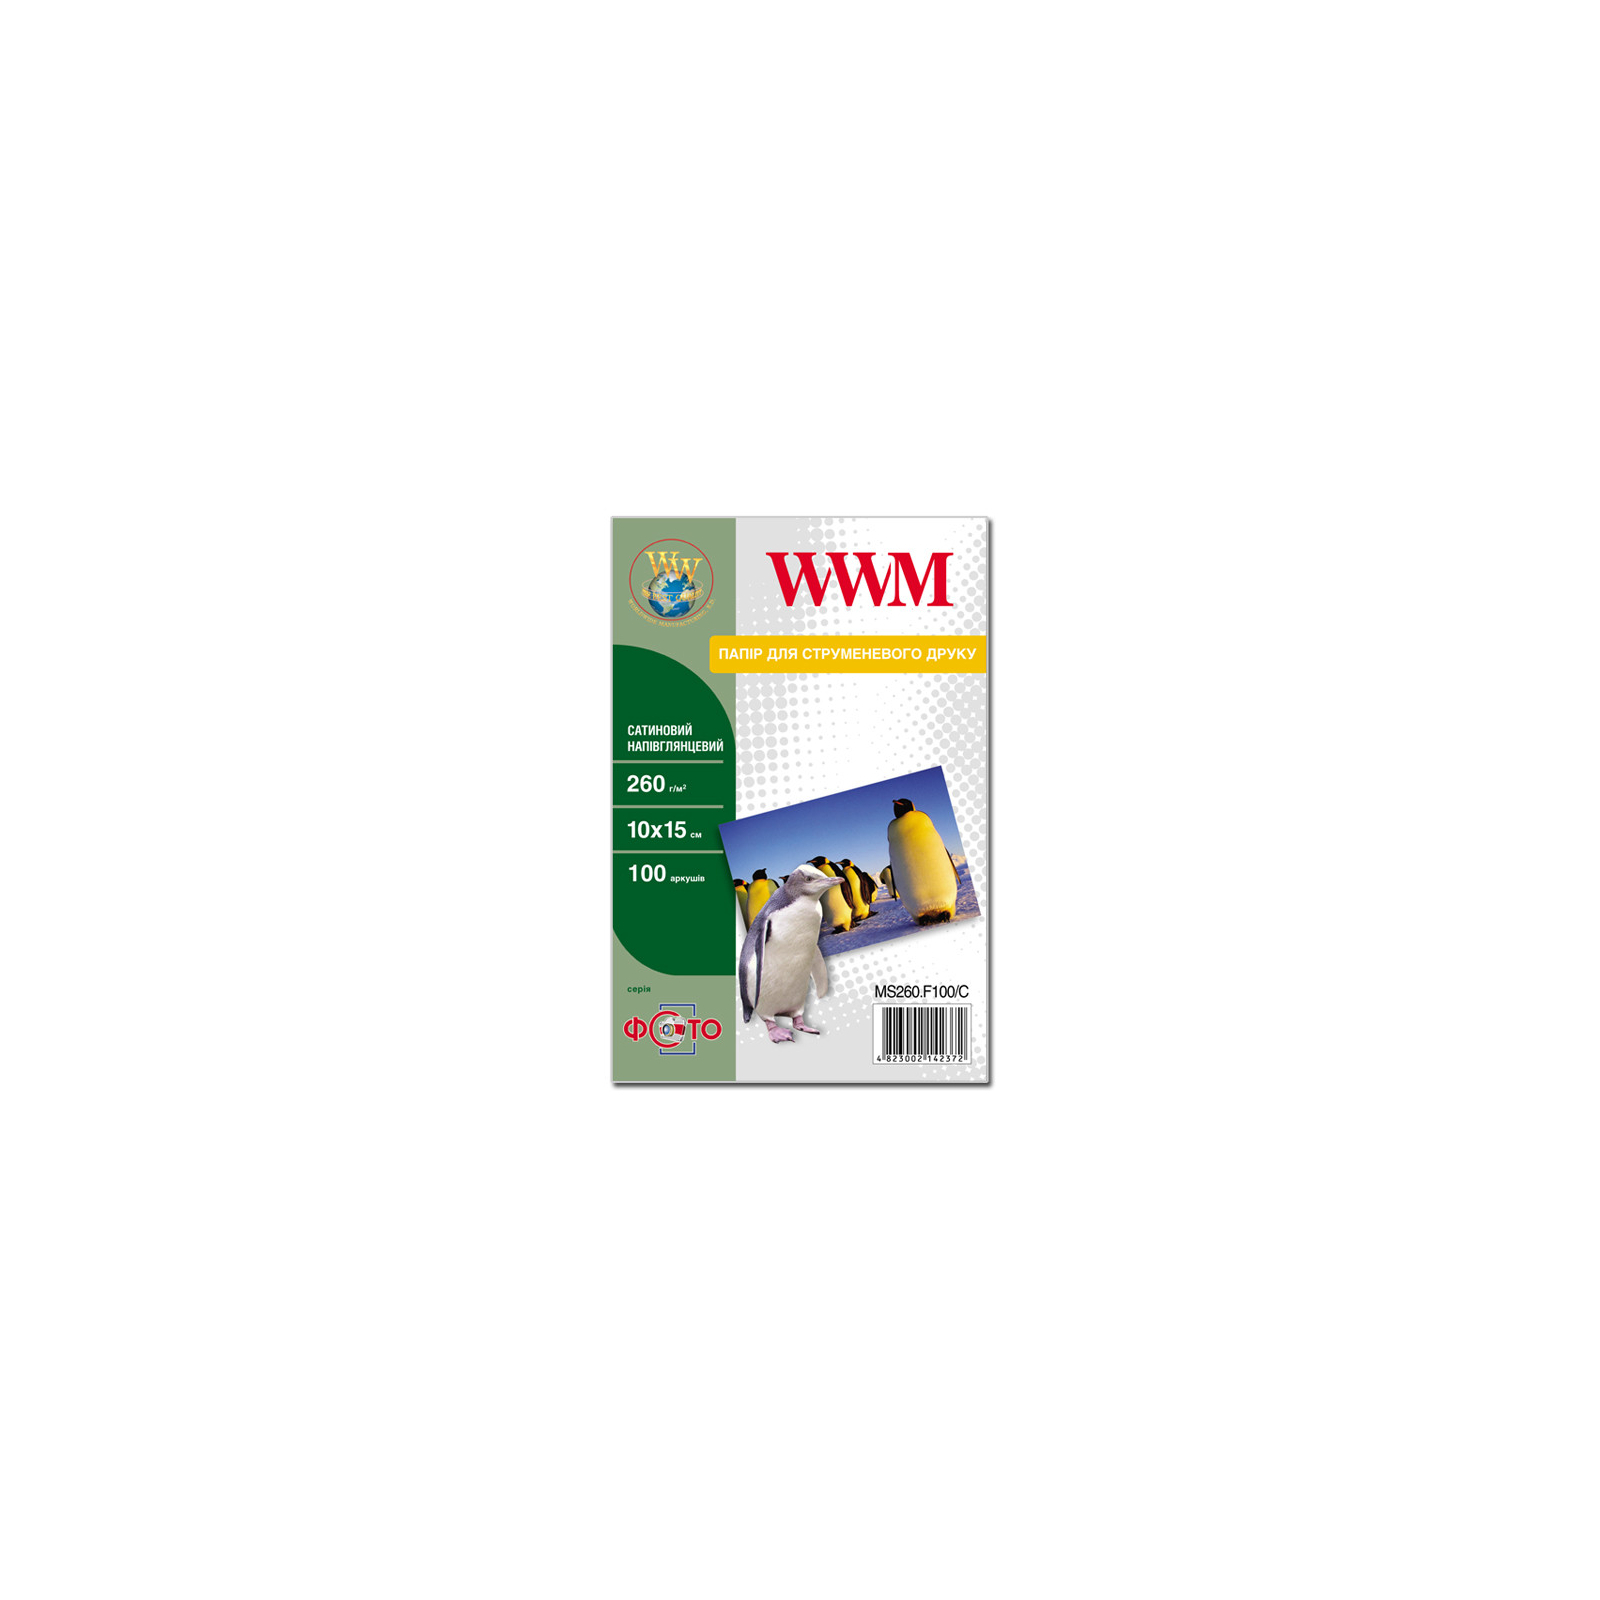 Фотобумага WWM 10x15 (MS260.F100/C)